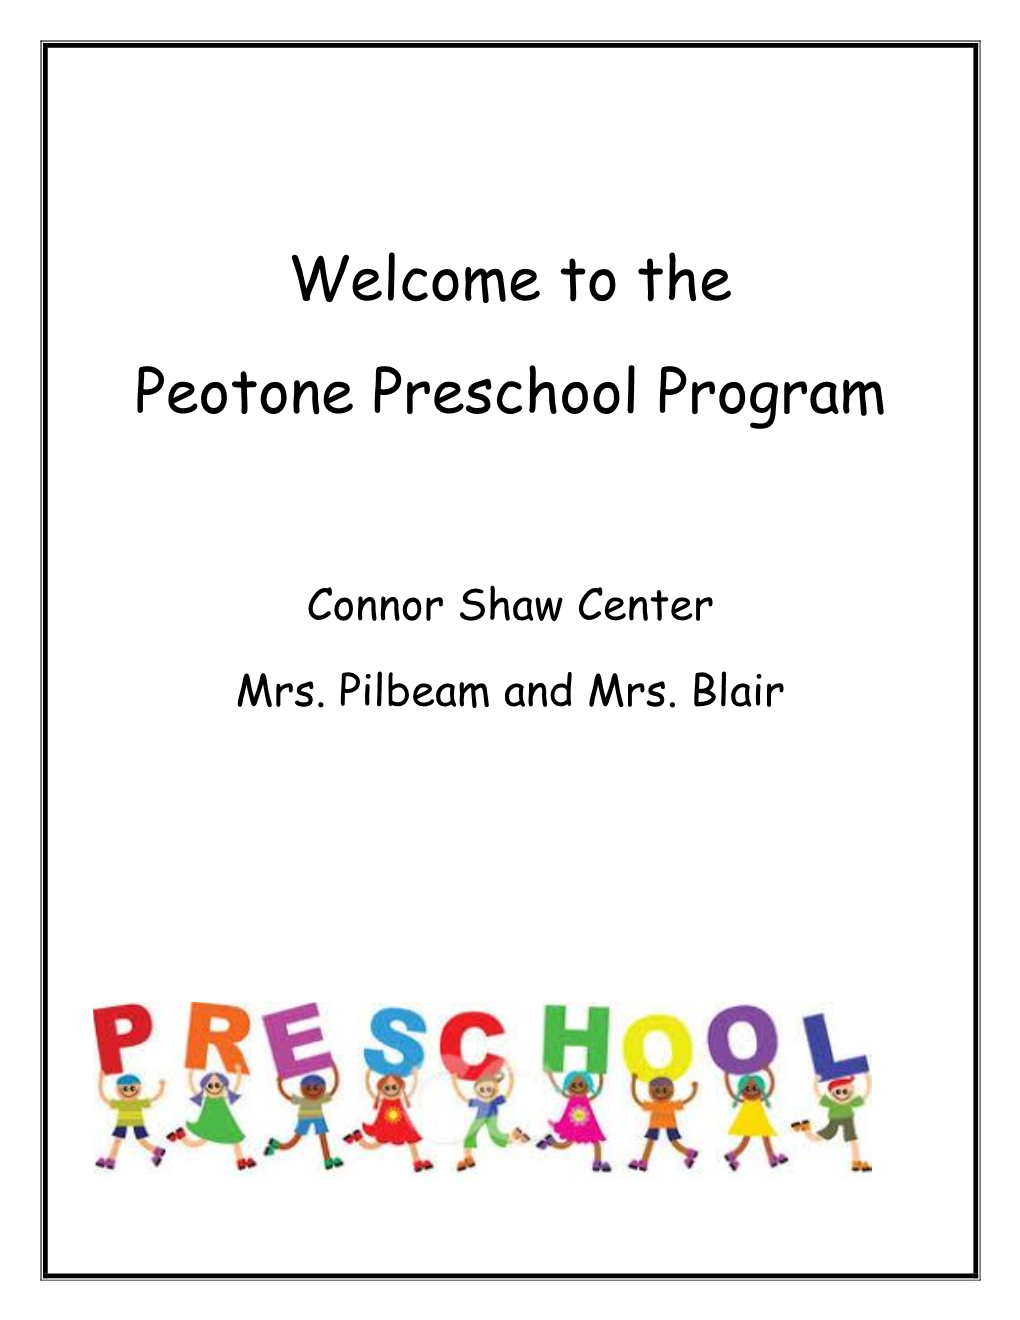 Welcome to the Peotone Preschool Program